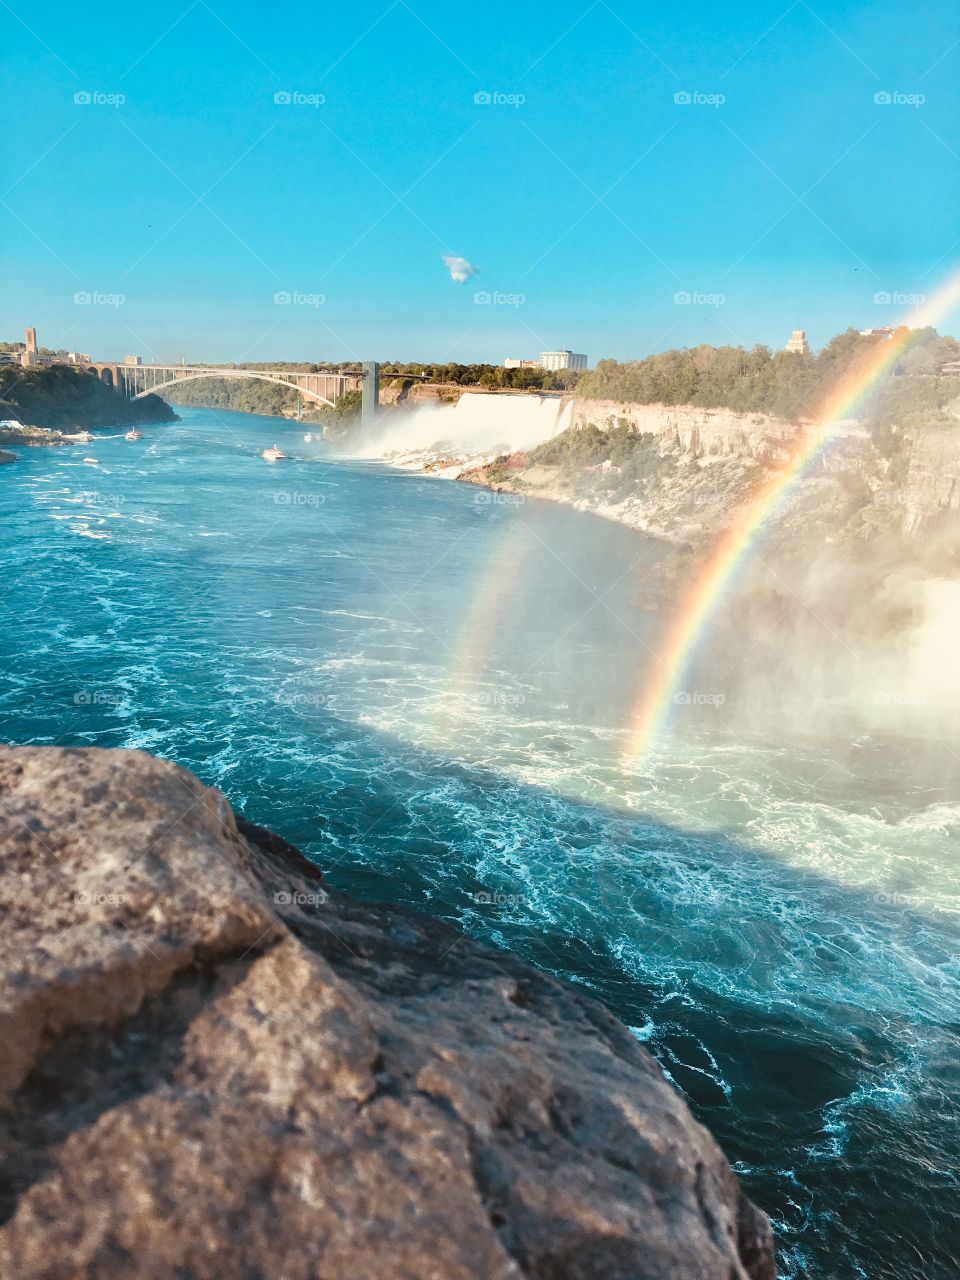 Double Rainbow at Niagara Falls